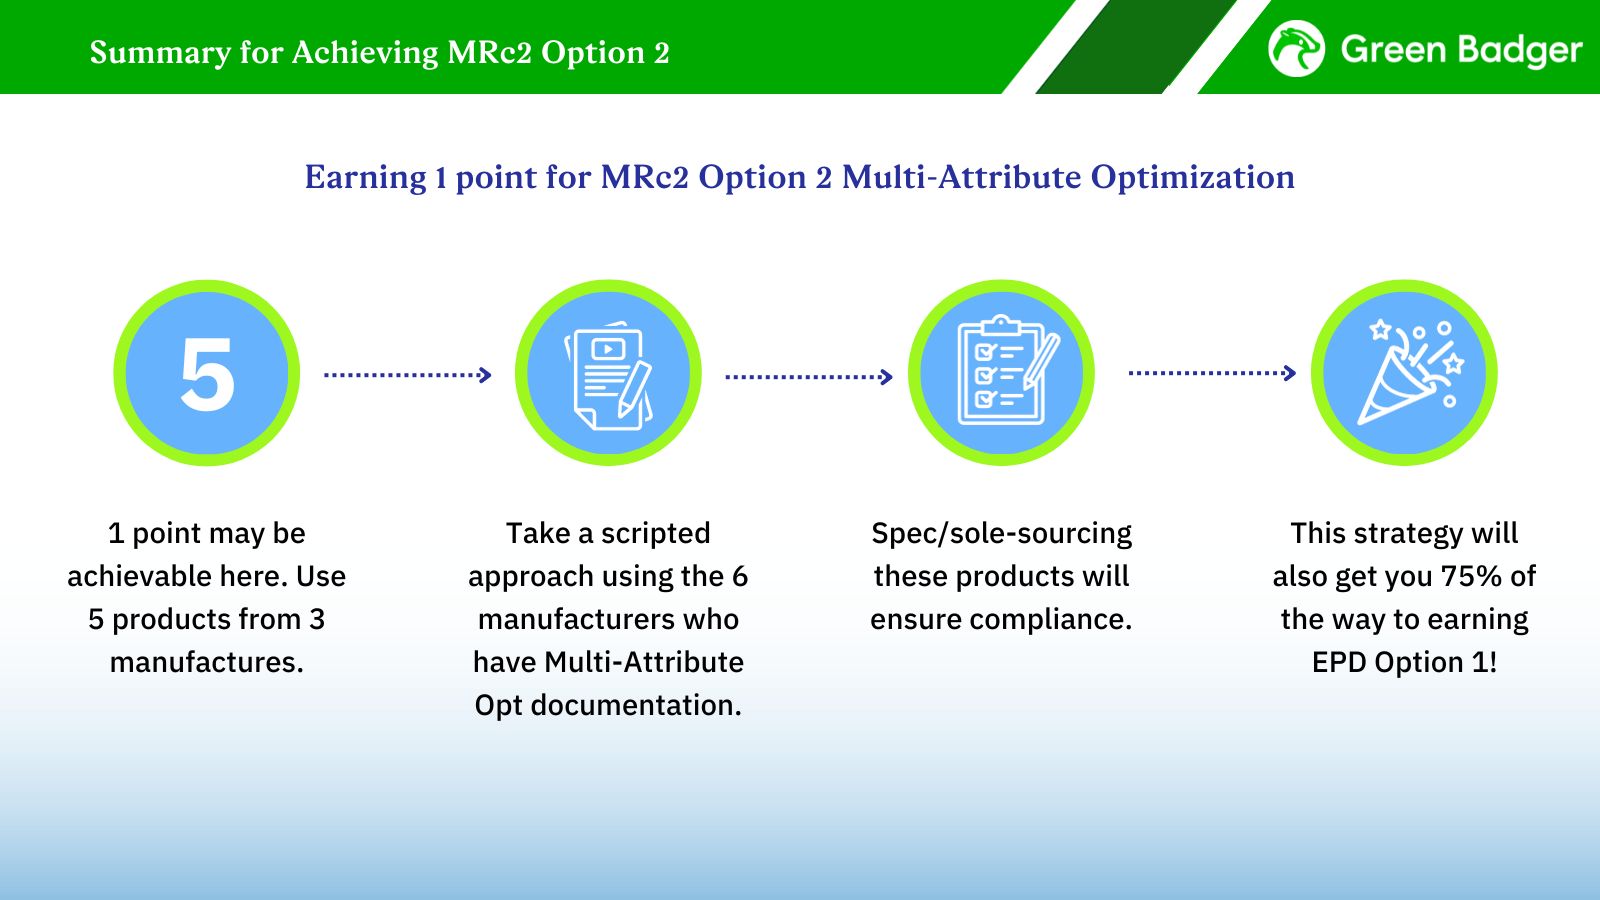 Summary for achieving MRc2 Option 2